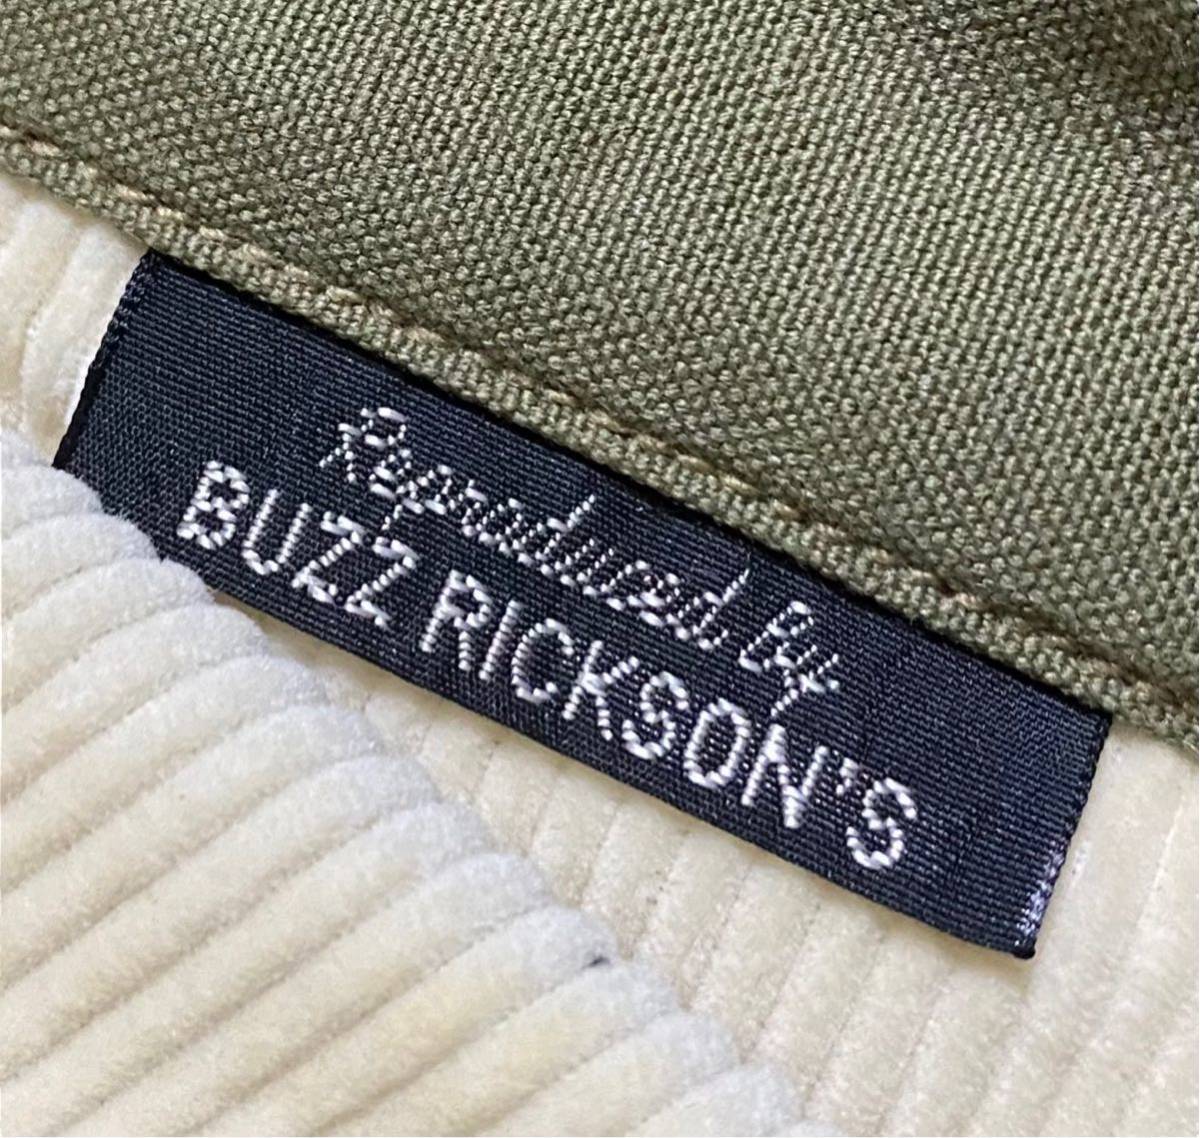 BUZZ RICKSON'S ROUGHWEAR CLOTHING B-15 FLIGHT JACKETバズリクソンズ ラフウエア 実名復刻 フライトジャケット ワッペンカスタム 38_画像8